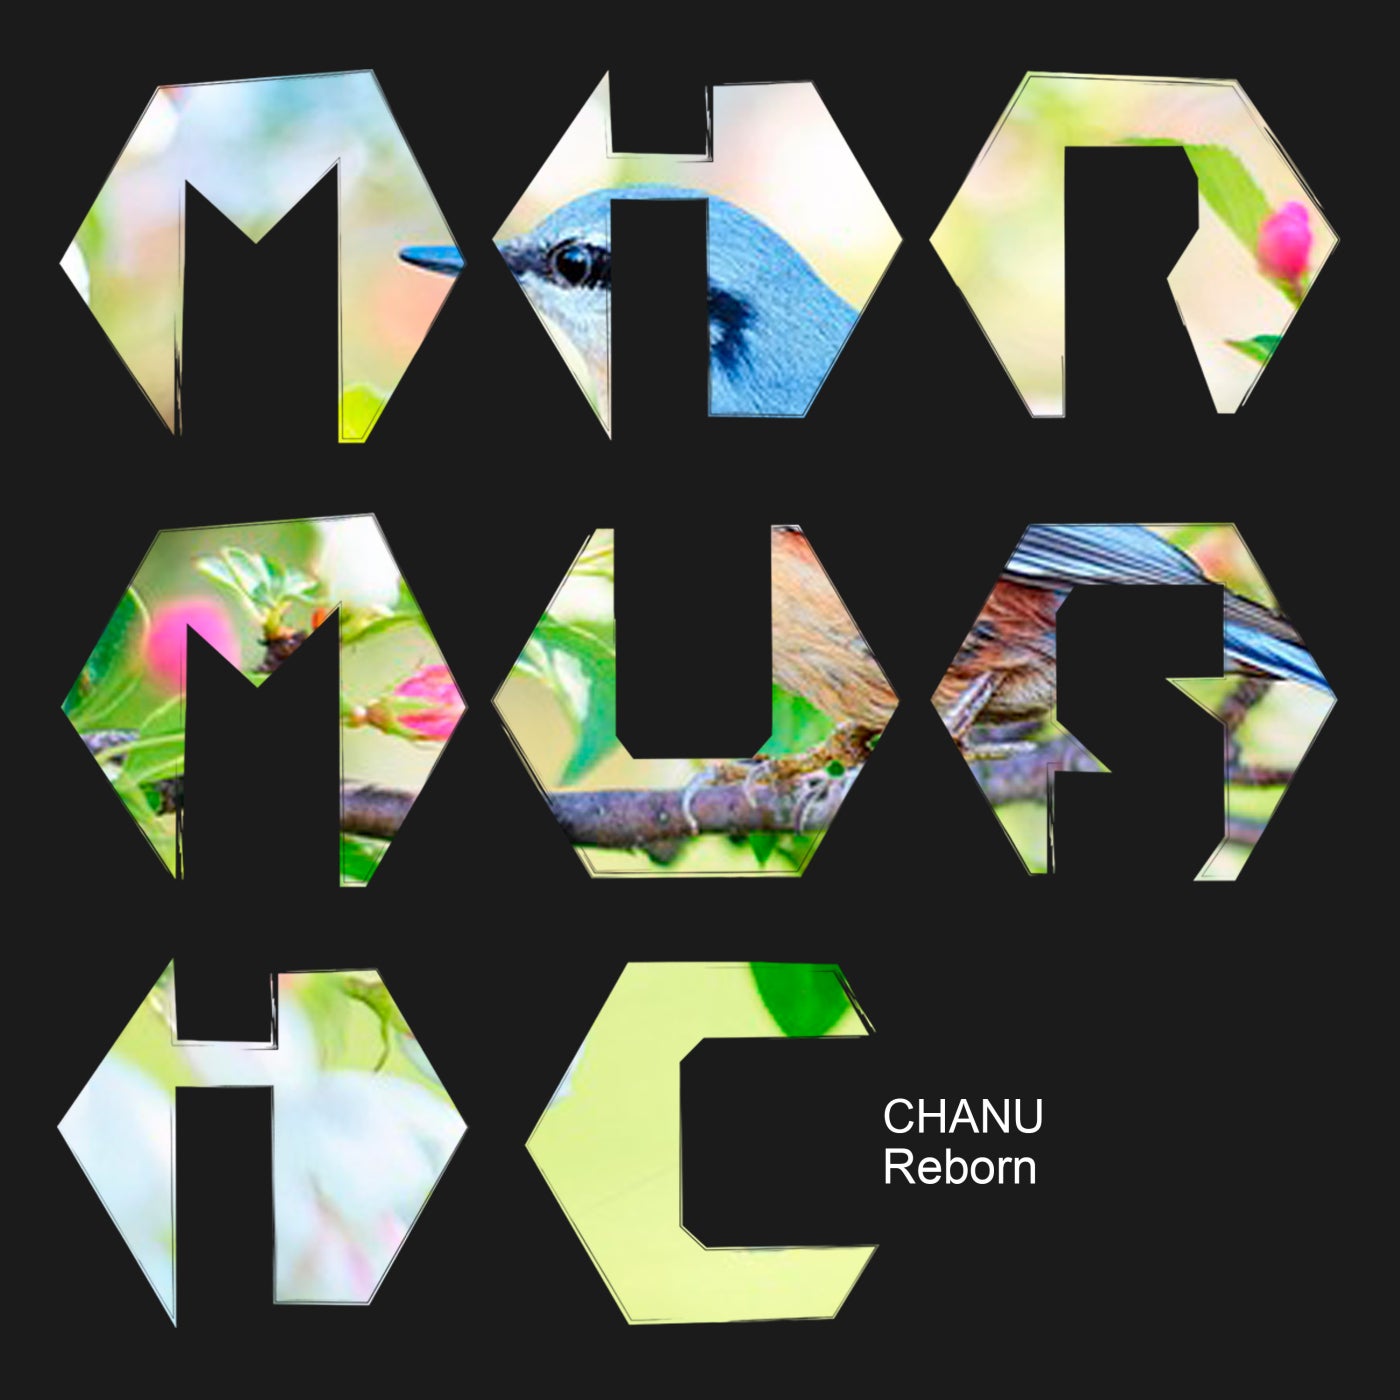 Chanu - Reborn [MIR MUSIC]